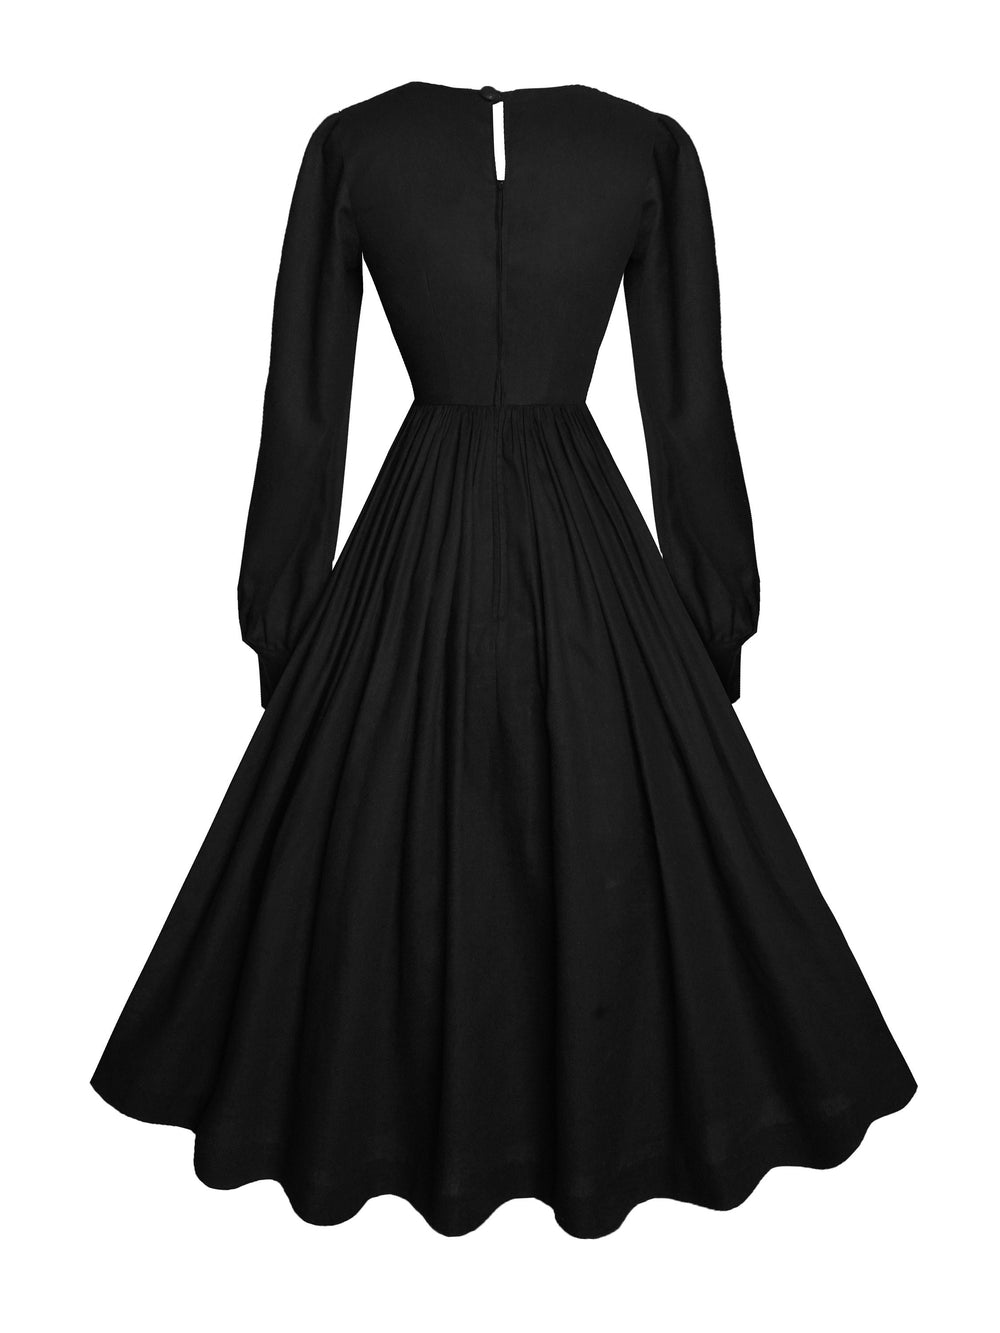 MTO - Agnes Dress in Midnight Black Linen